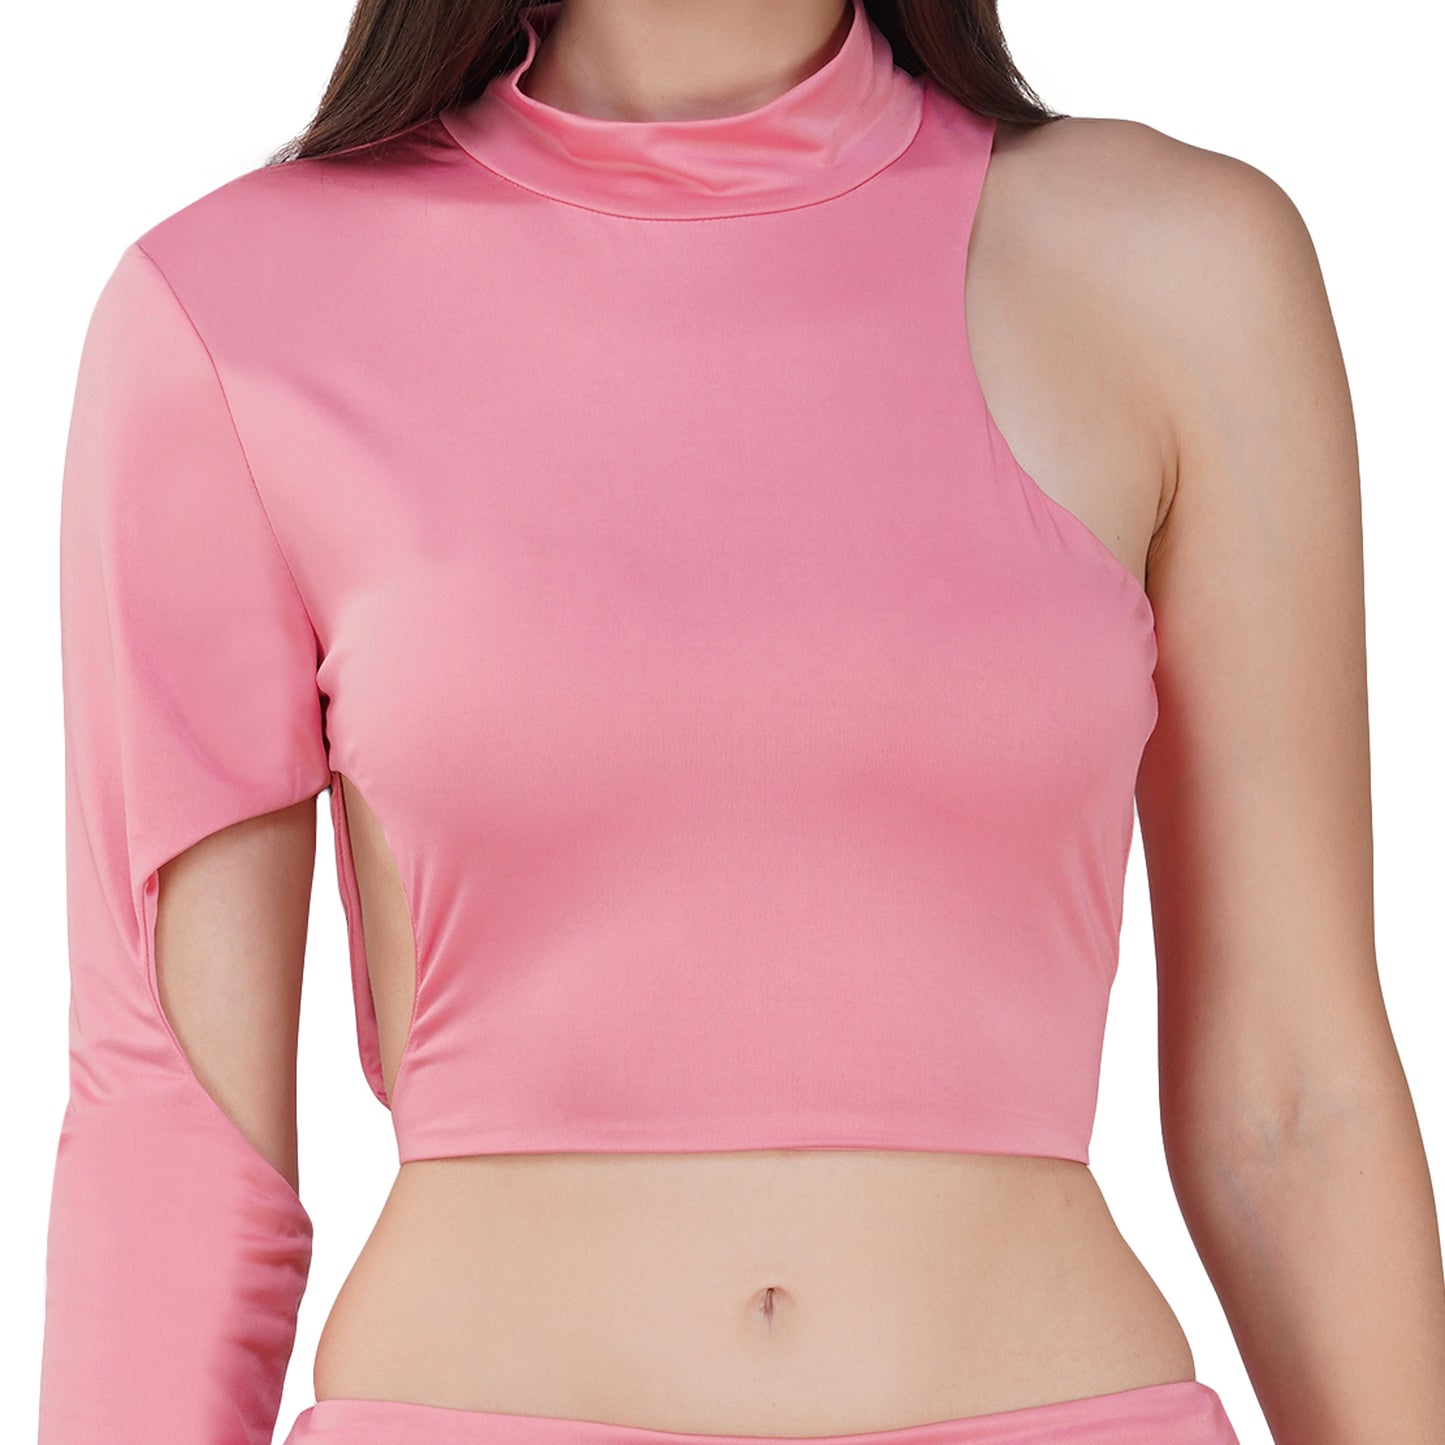 SLAY. Women's Pink Asymmetric Cutout Top & Skirt Co ord Set